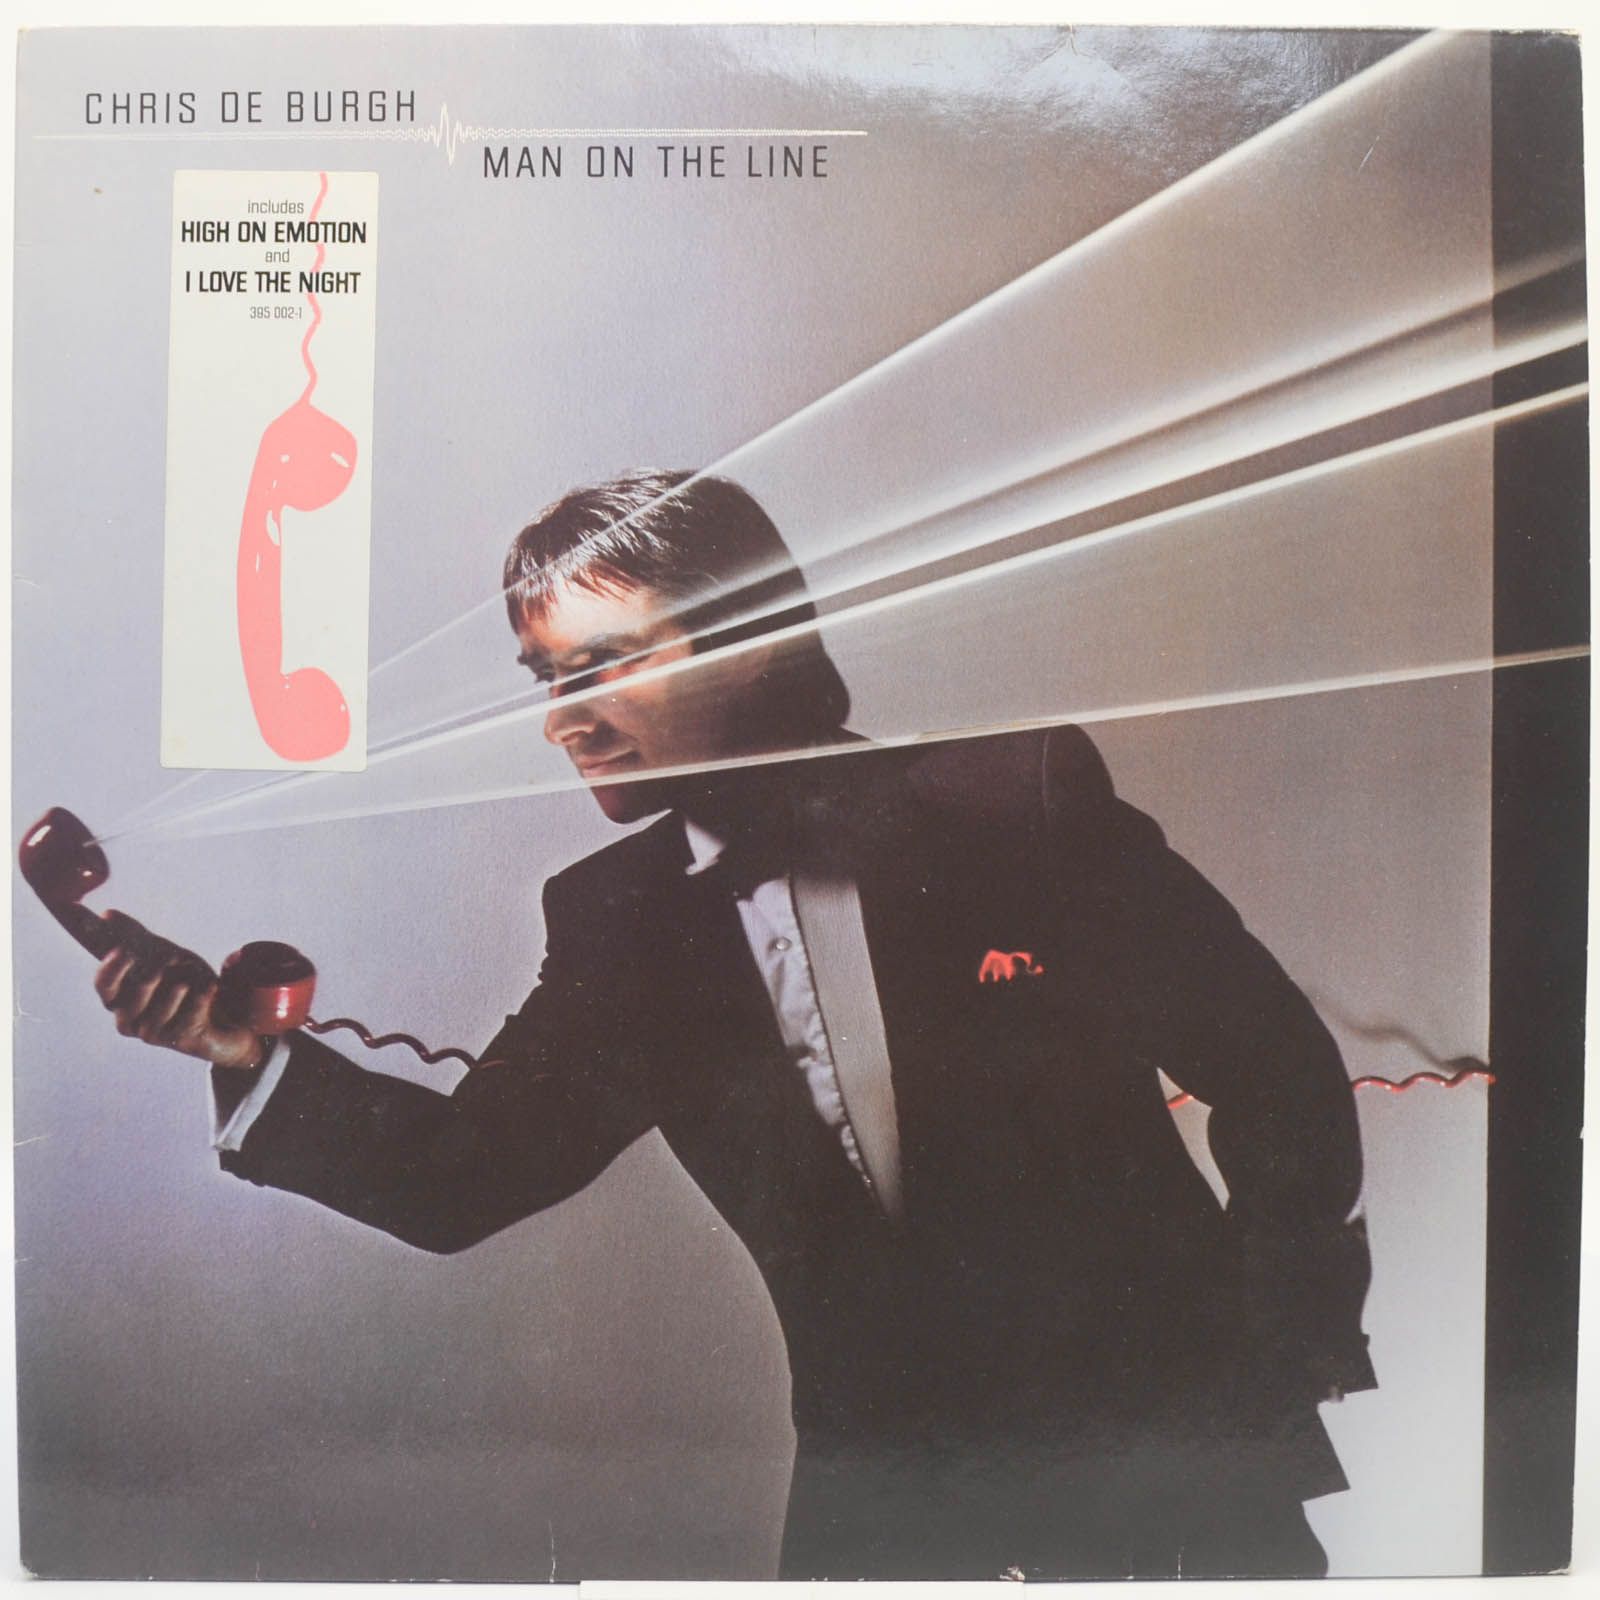 Chris de Burgh — Man On The Line, 1984